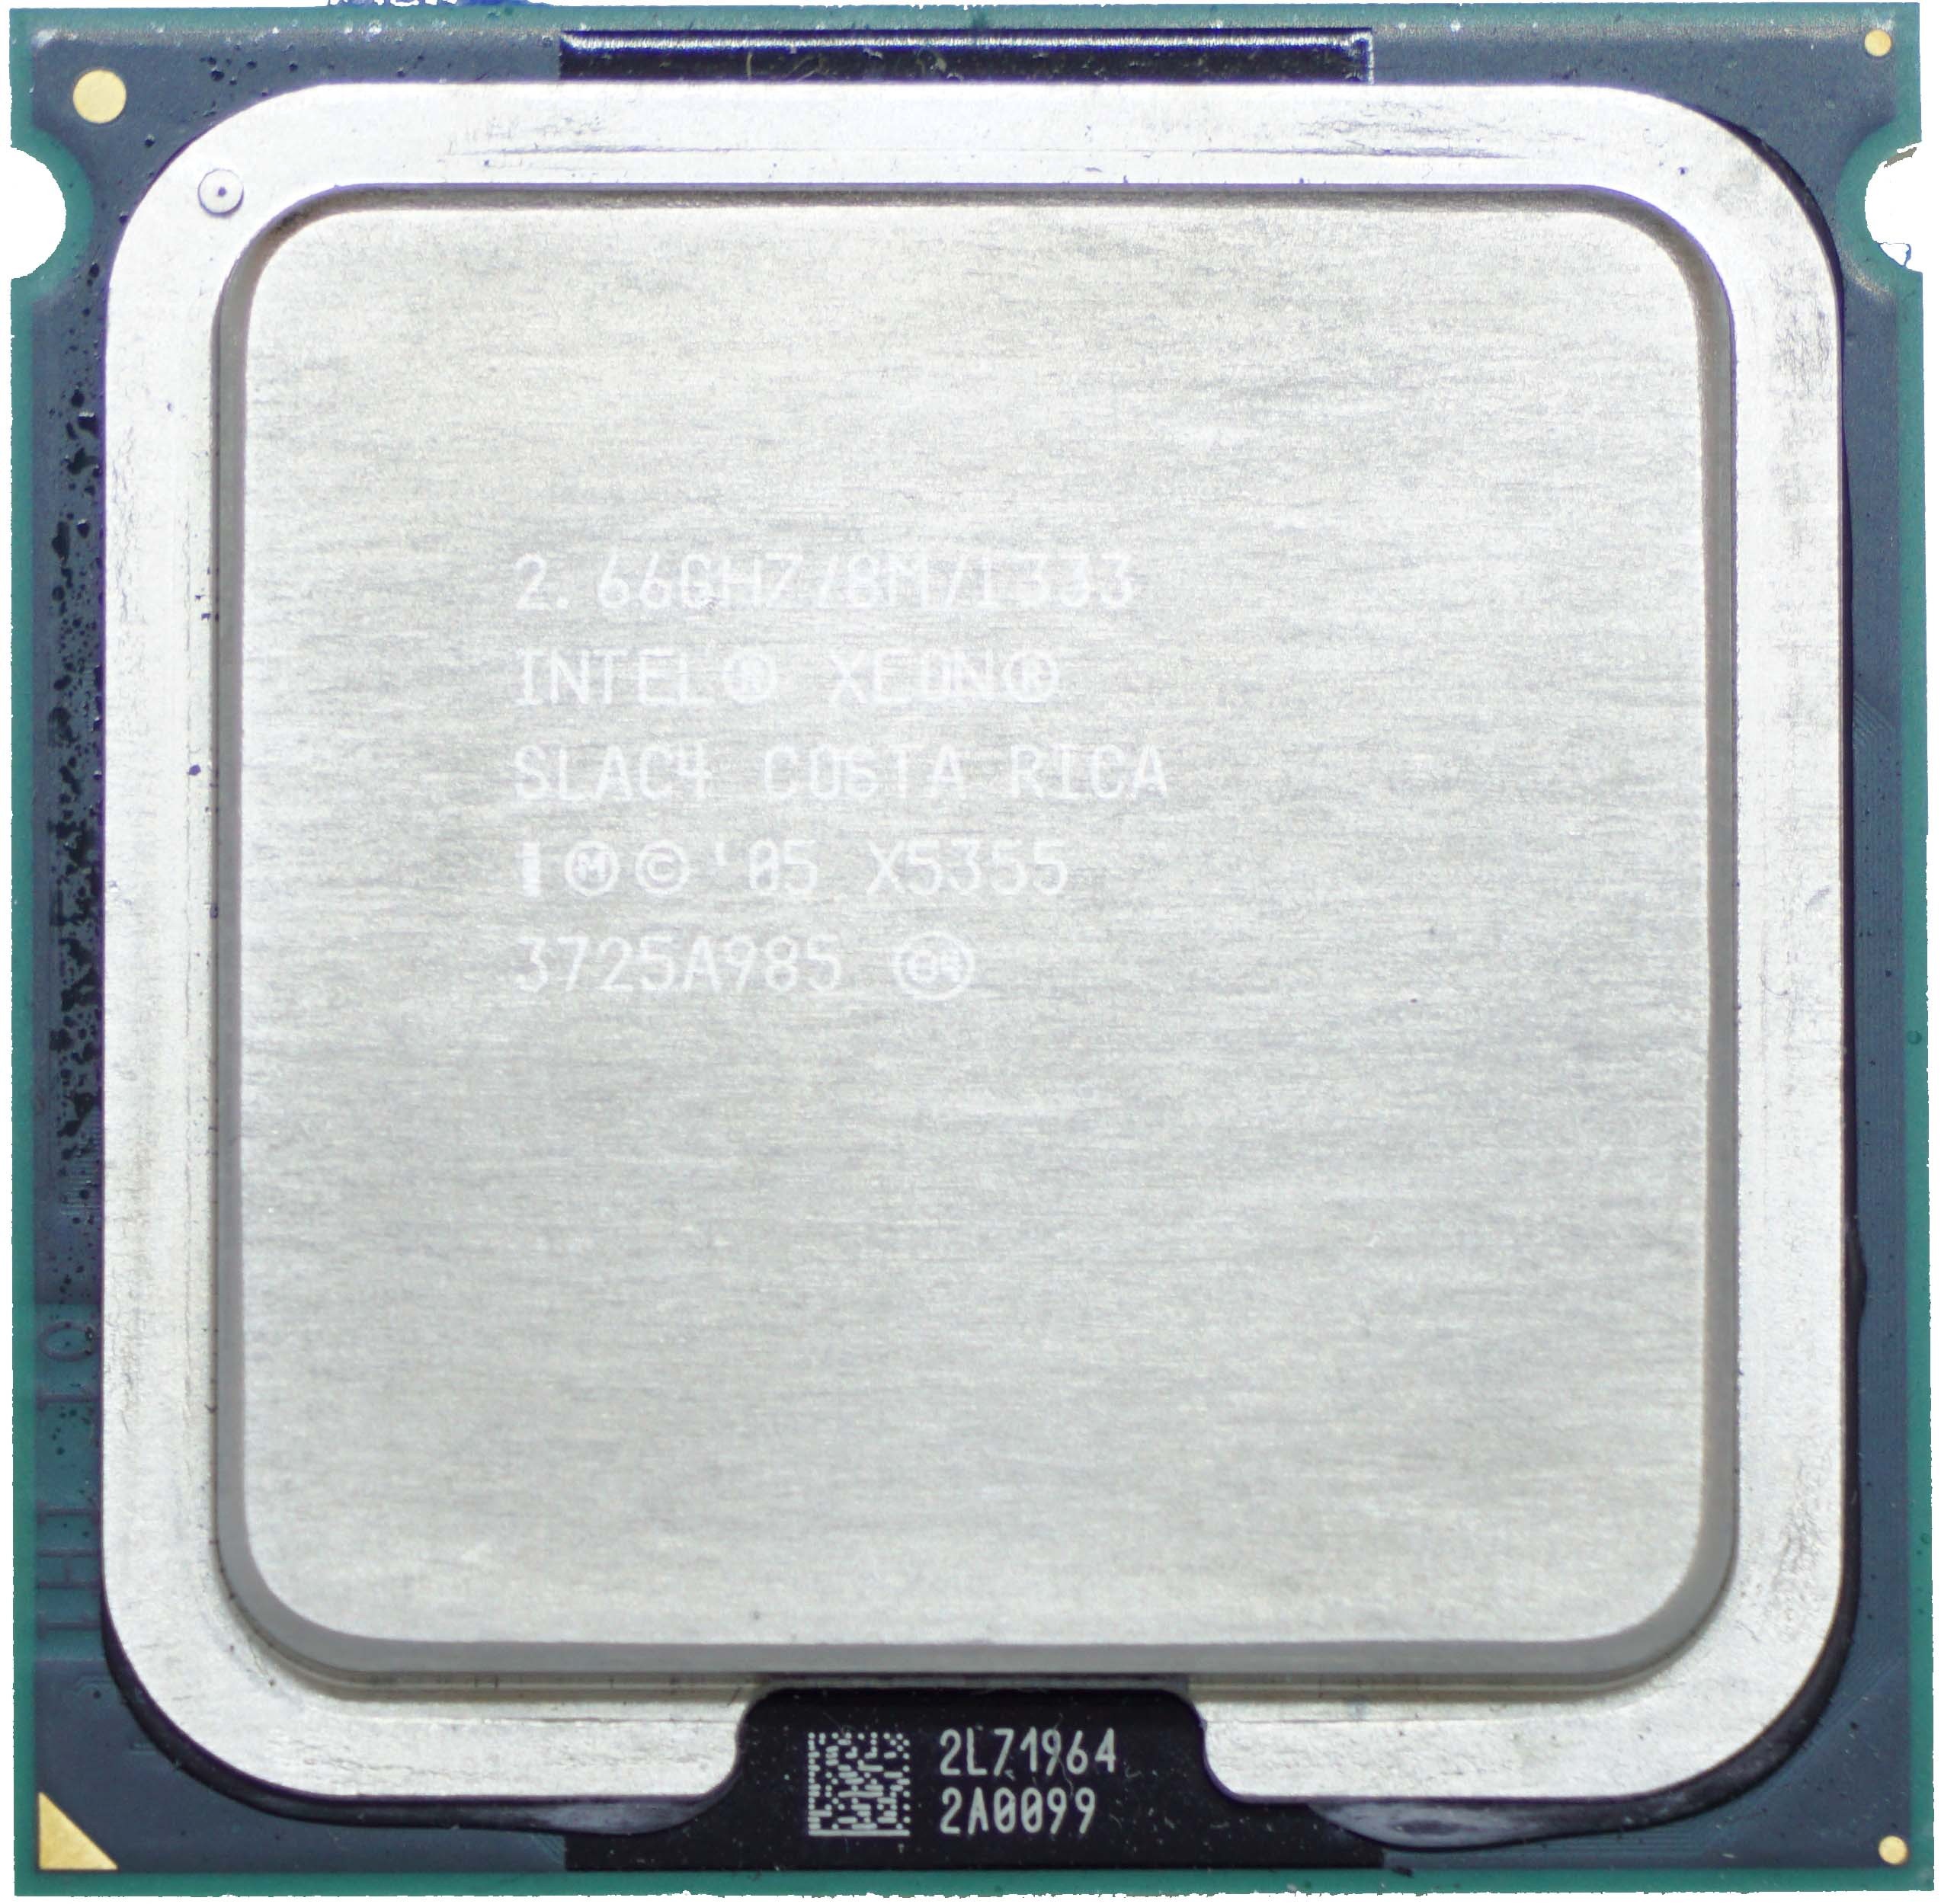 Intel Xeon X5355 (SLAC4) 4-Core 2.66GHz LGA771 8MB 120W CPU Processor